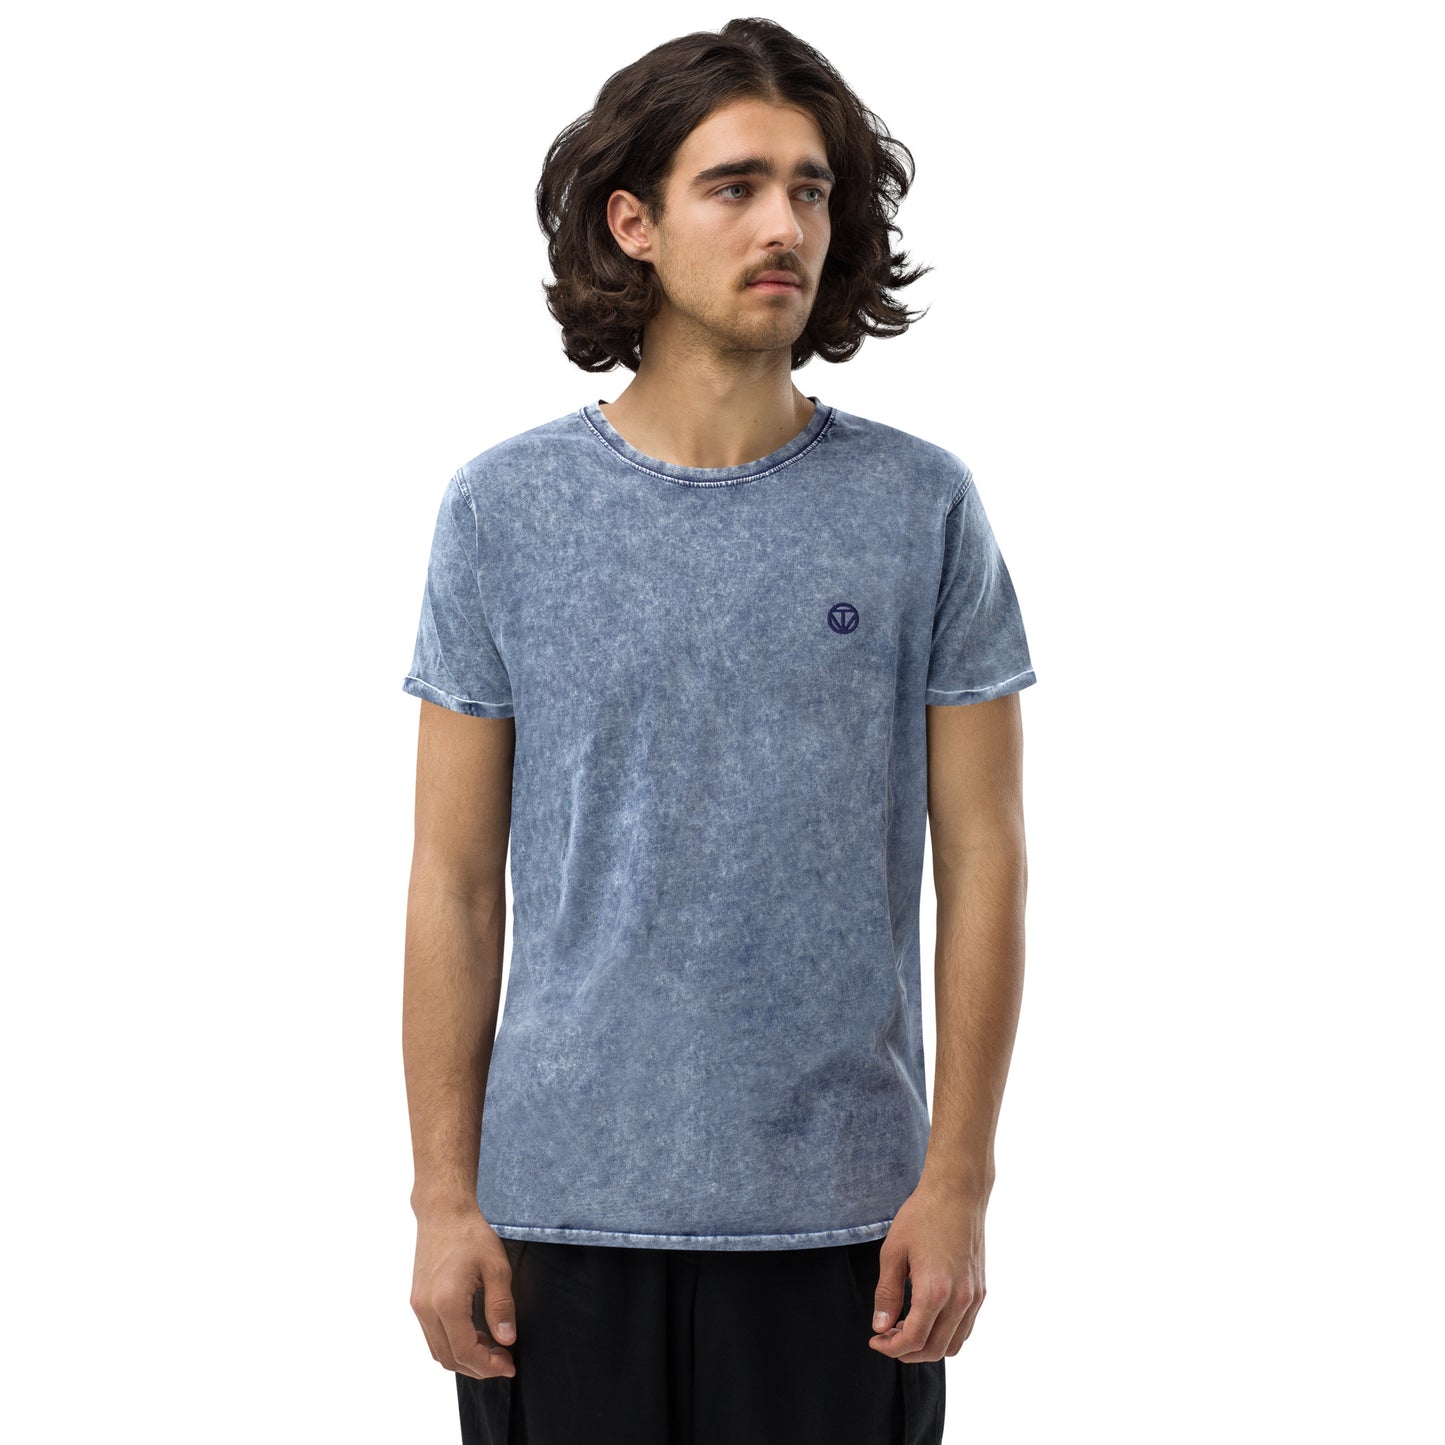 Herren Baumwoll T-Shirt meliert 23 (Blau)